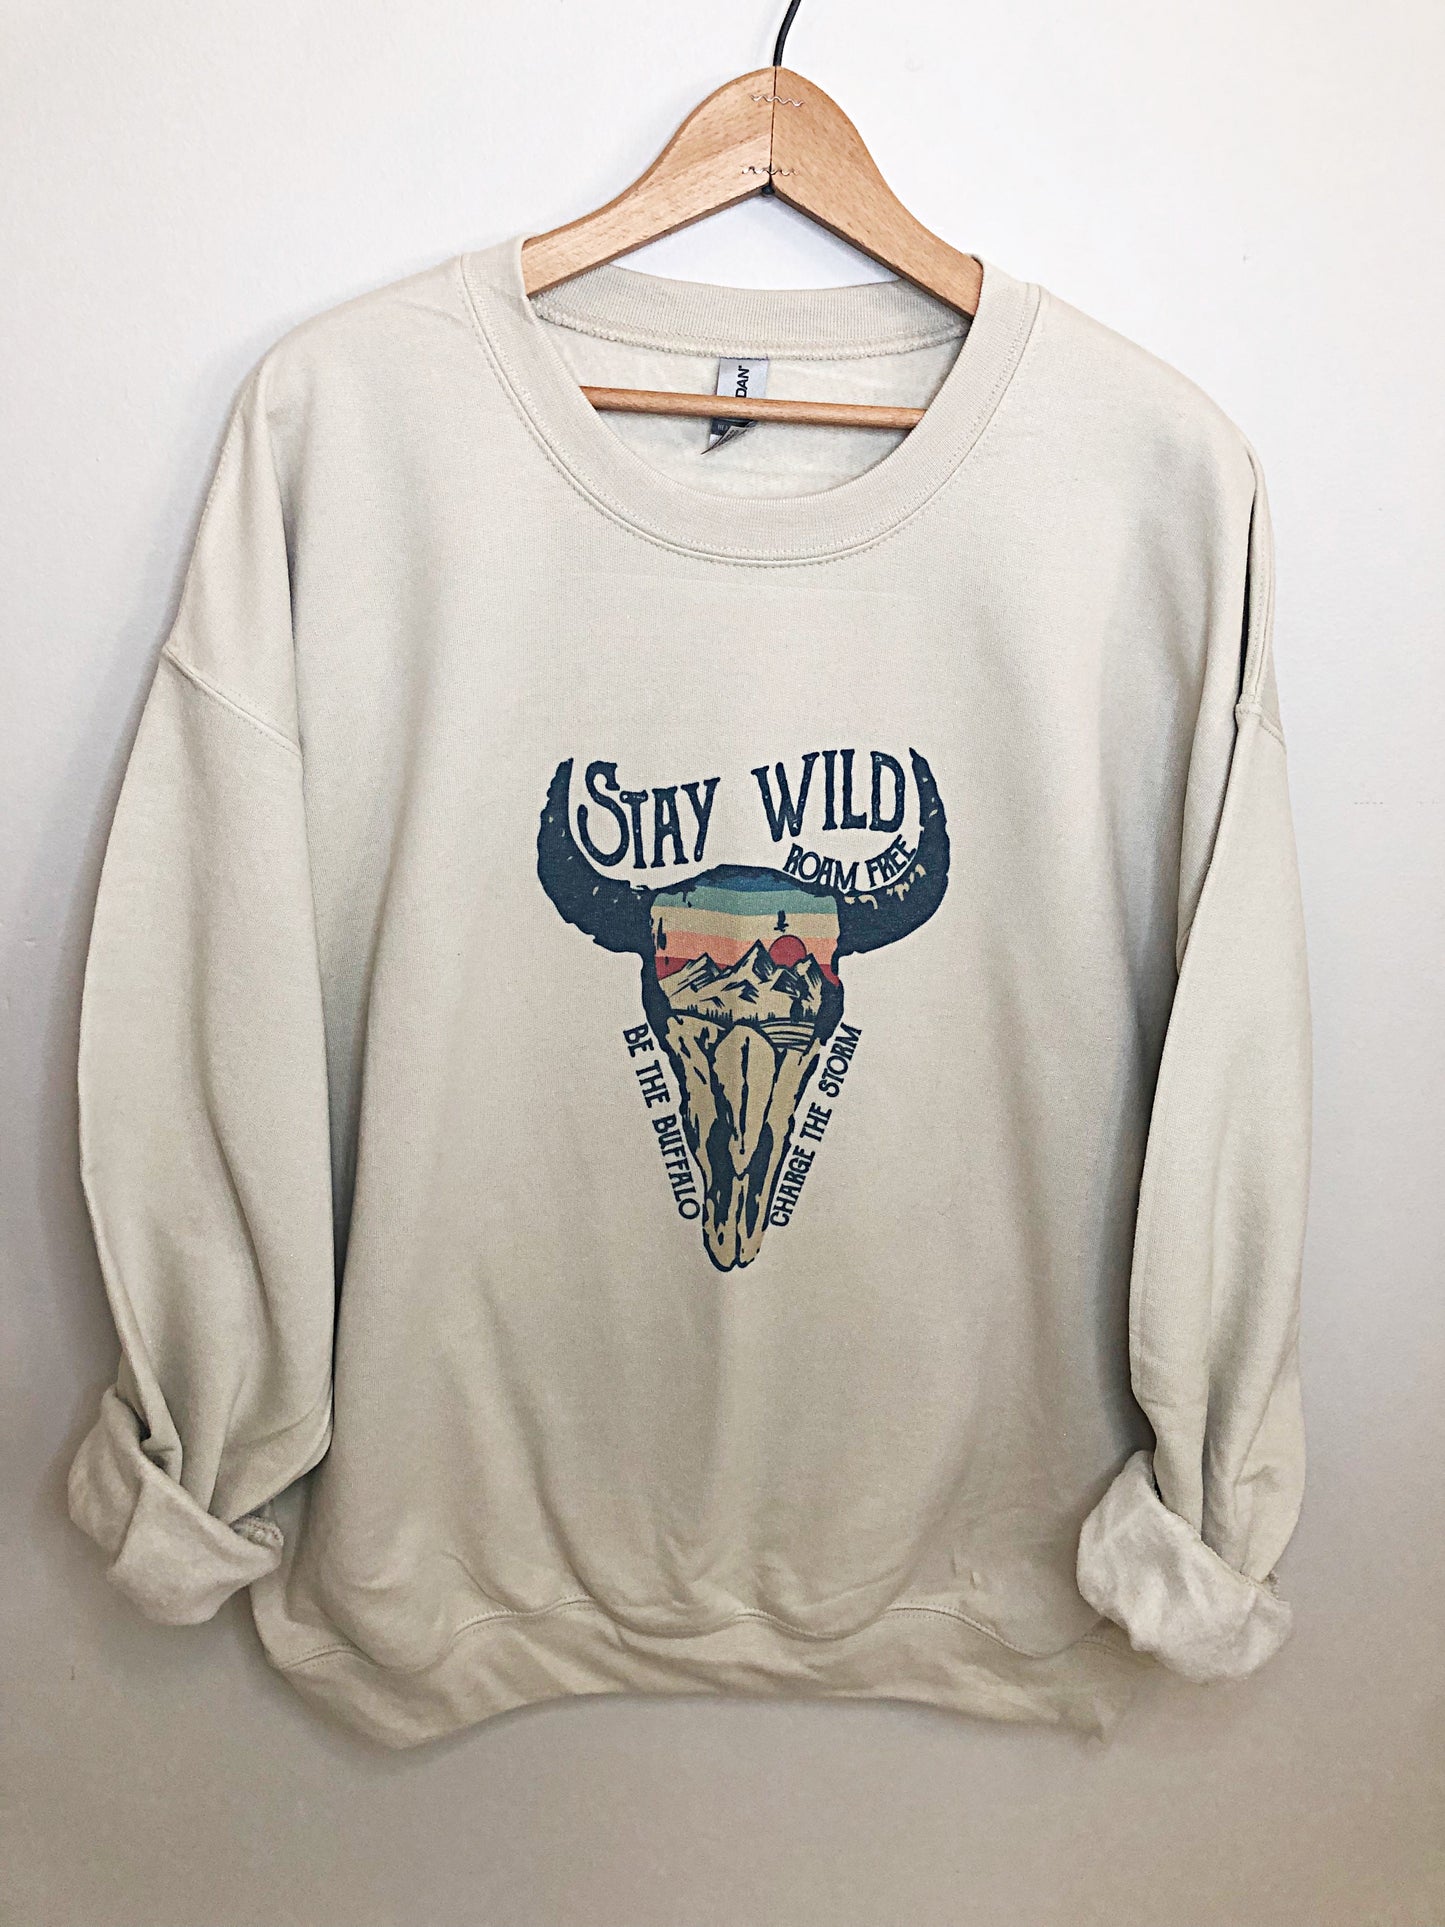 Stay Wild Crew Neck *Final Sale*